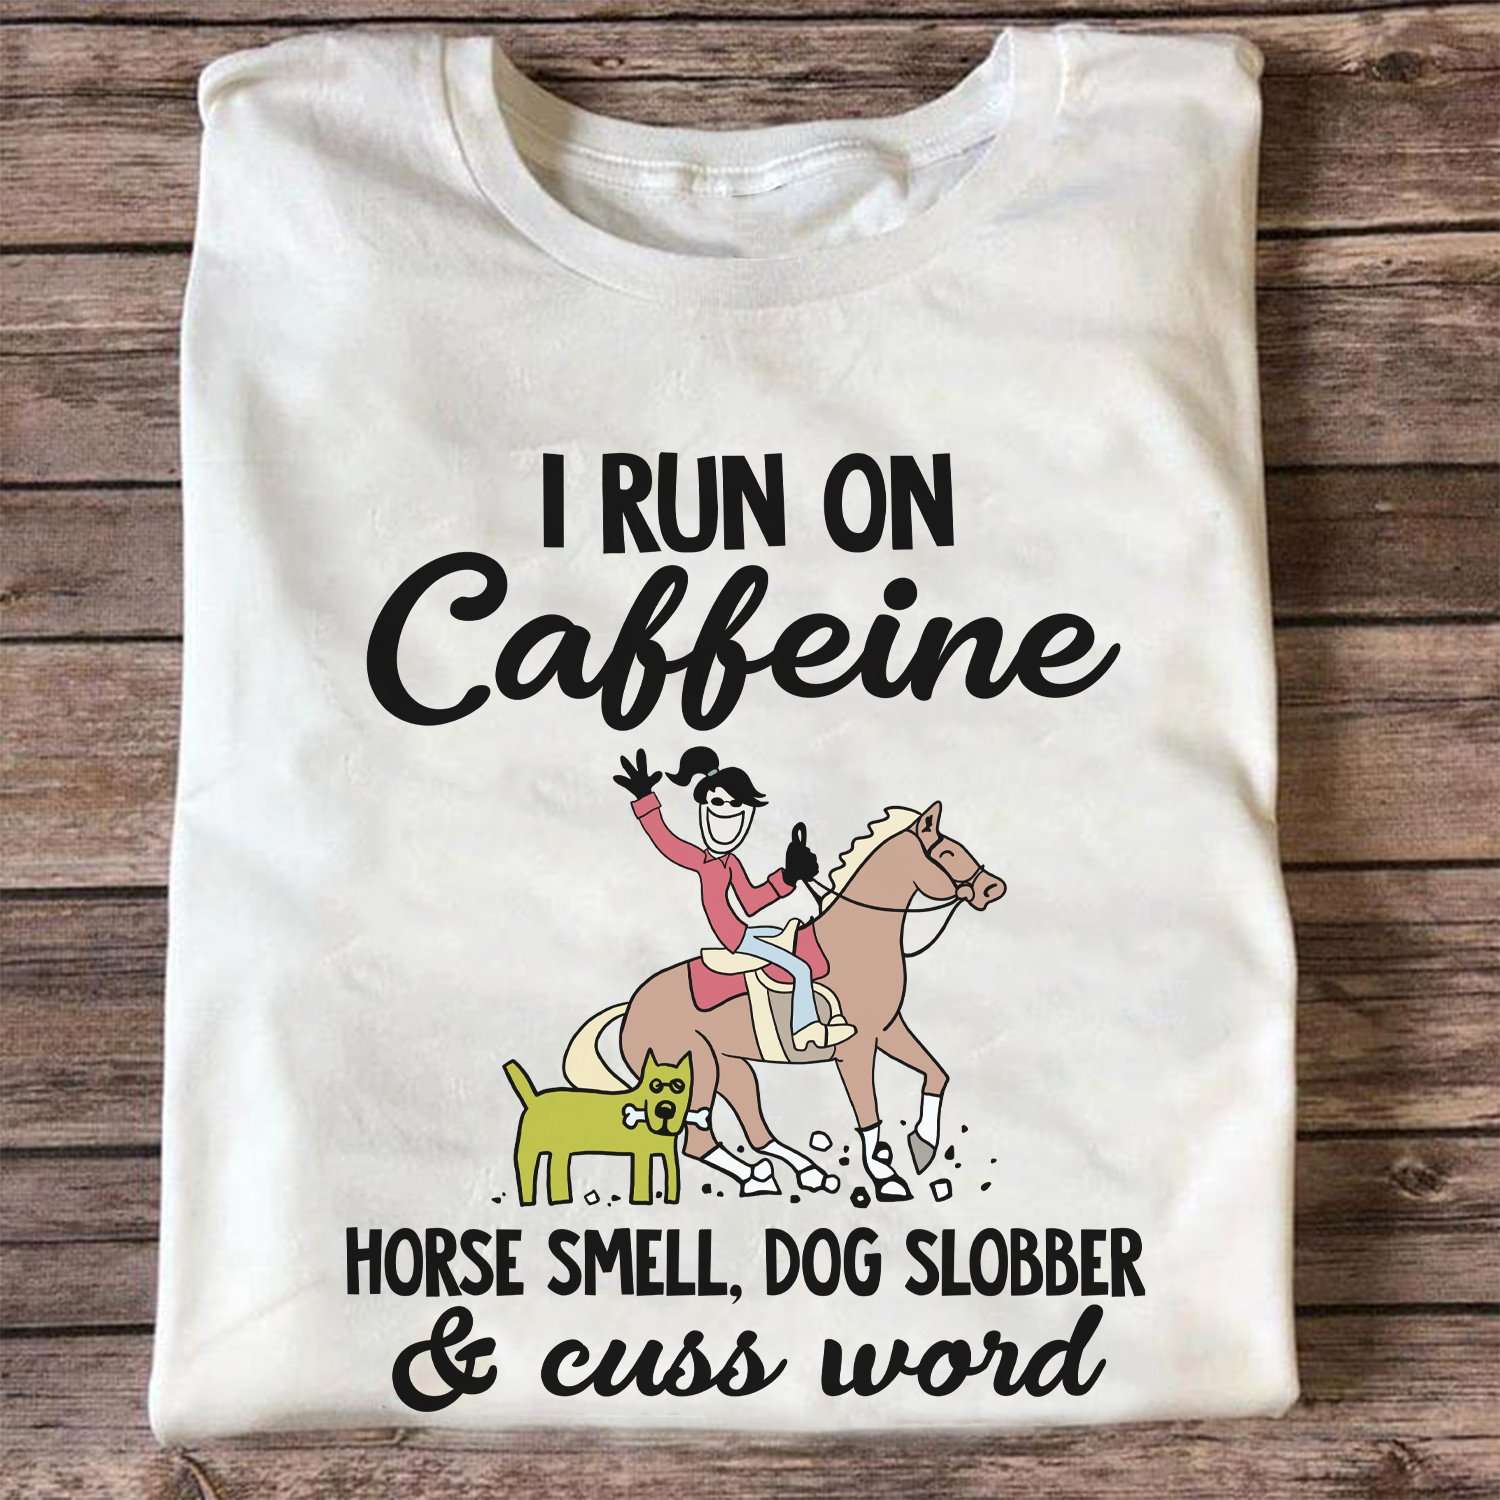 I run on caffeine, horse smell, dog slobber and cuss word - Horse and dog